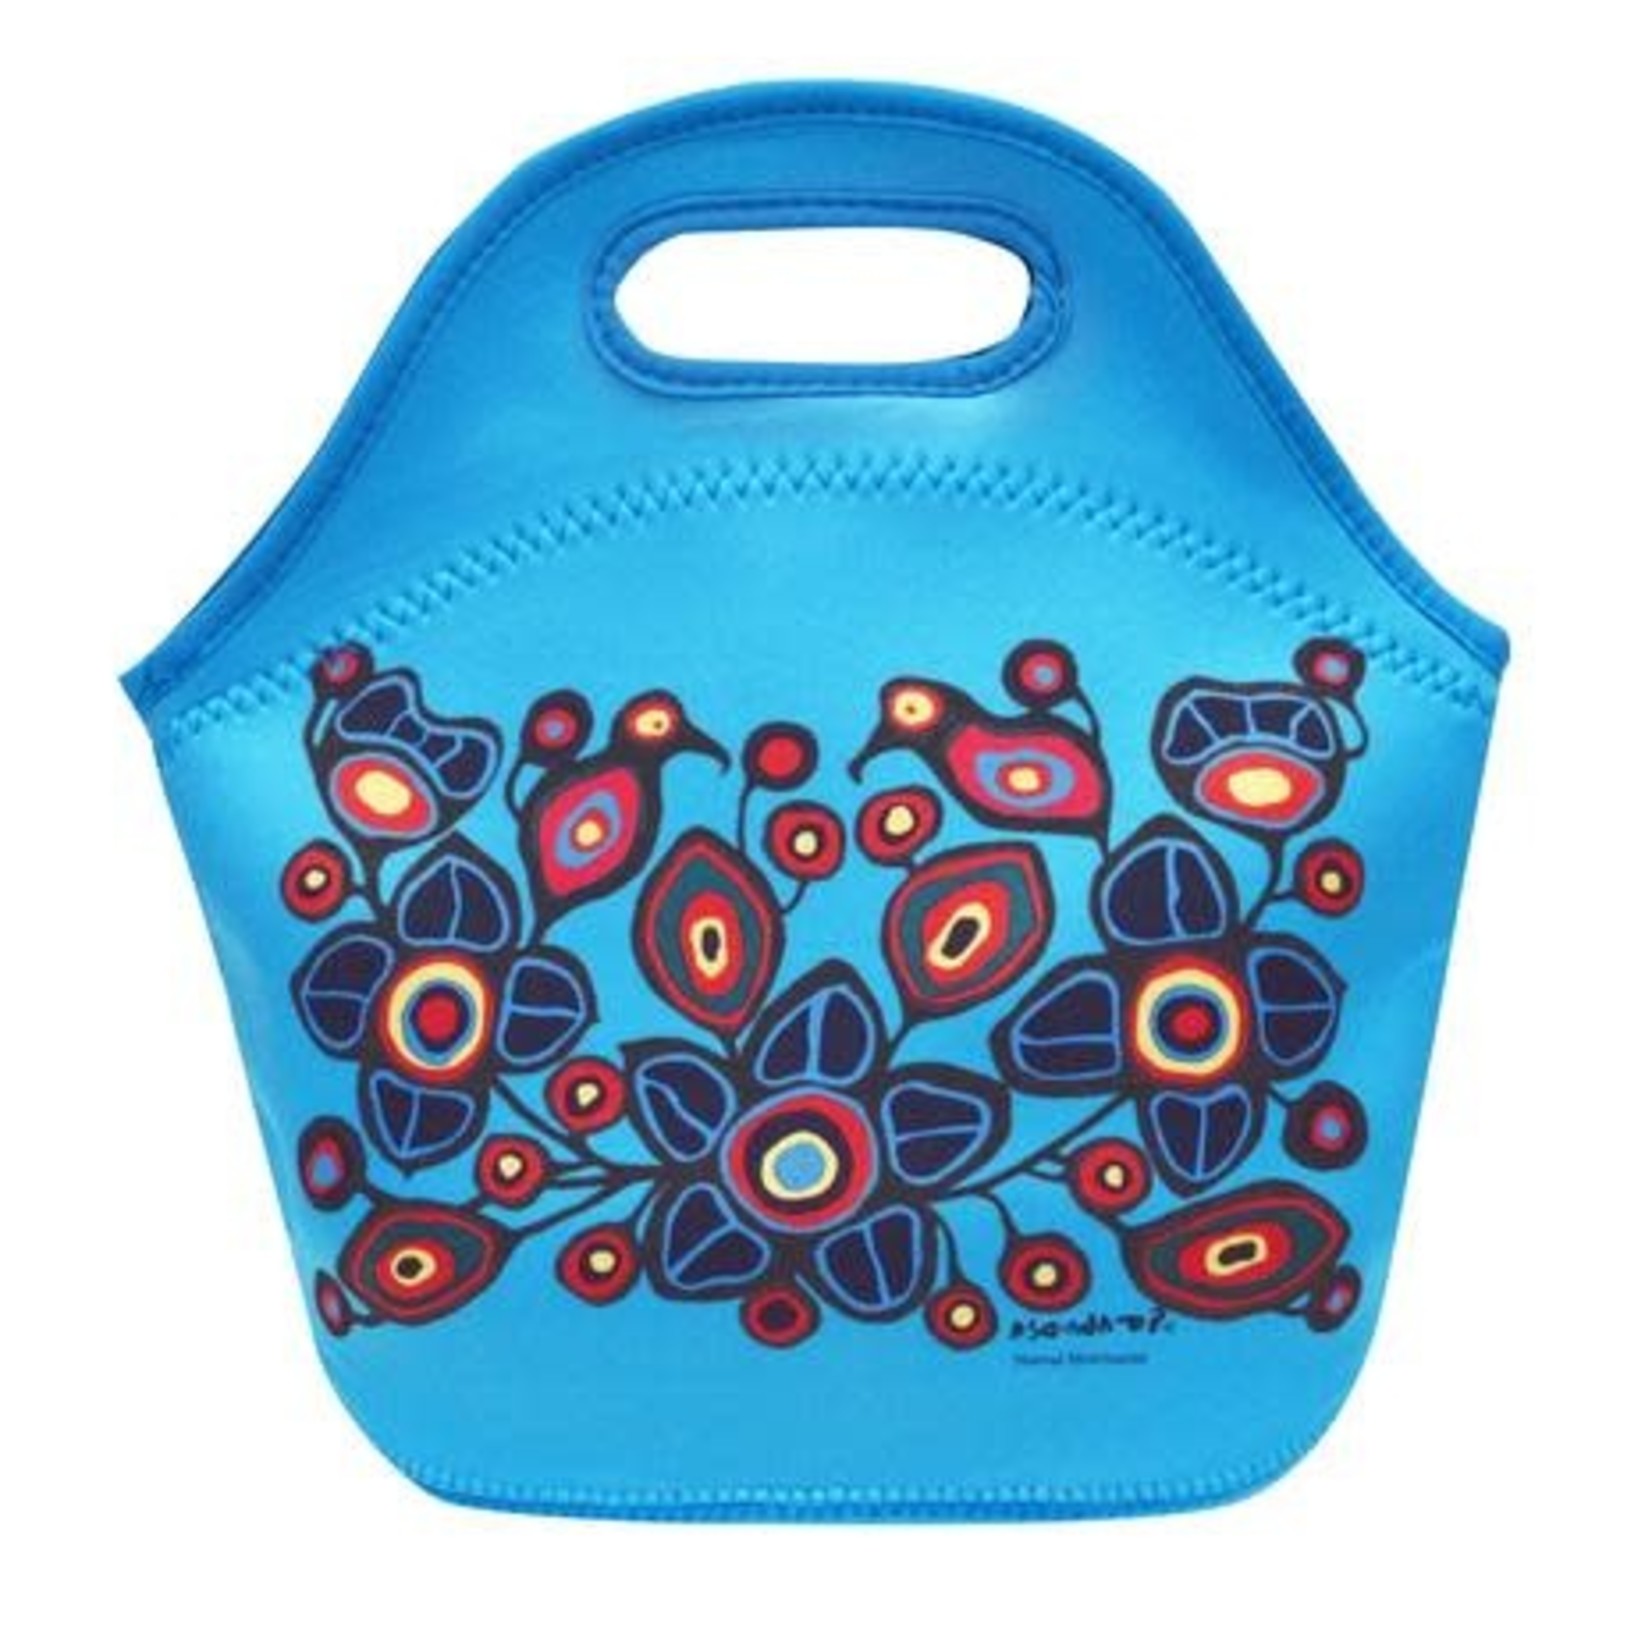 SALE Lunch Bag - Morrisseau - Flowers & Birds